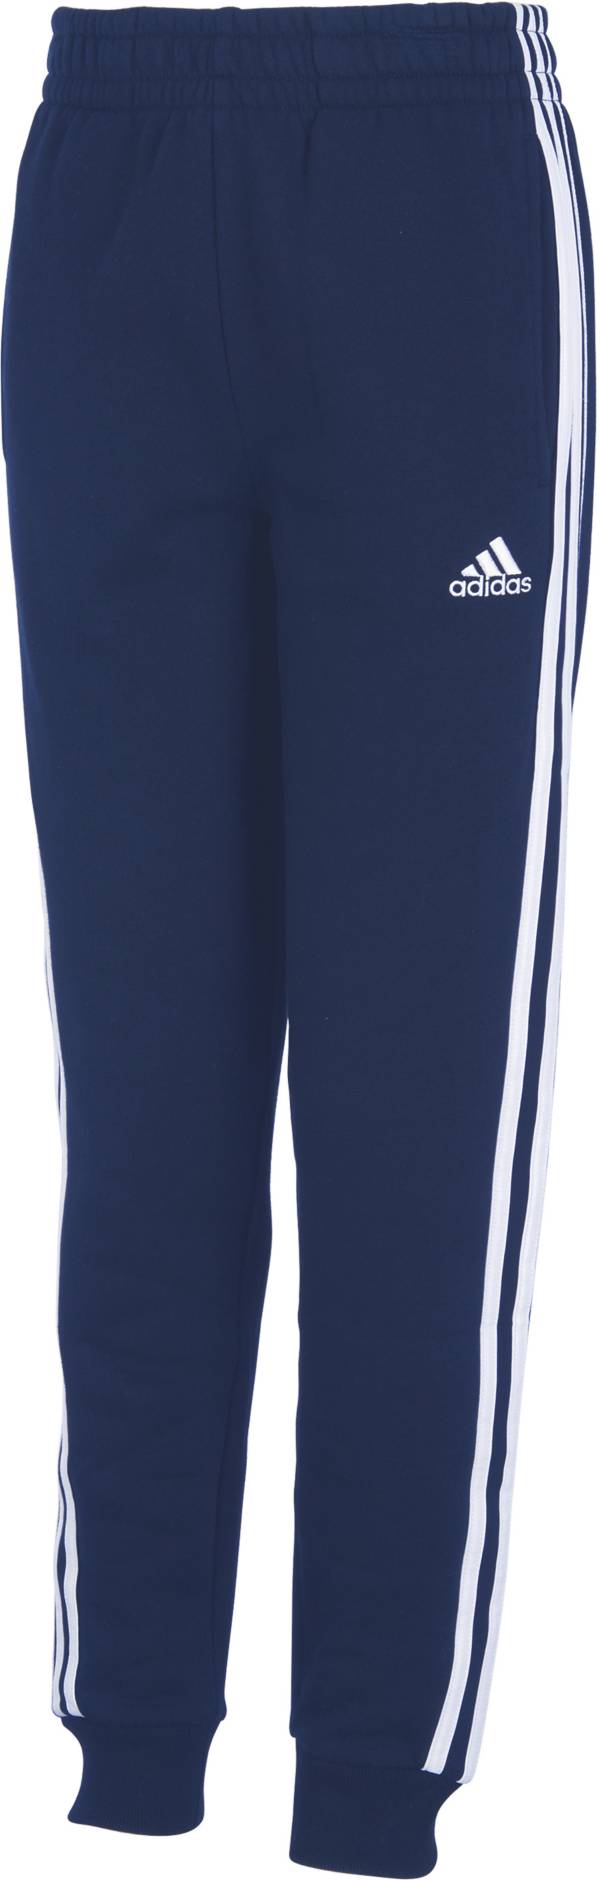 adidas Boys' Plus Size Iconic Tricot Jogger Pants product image